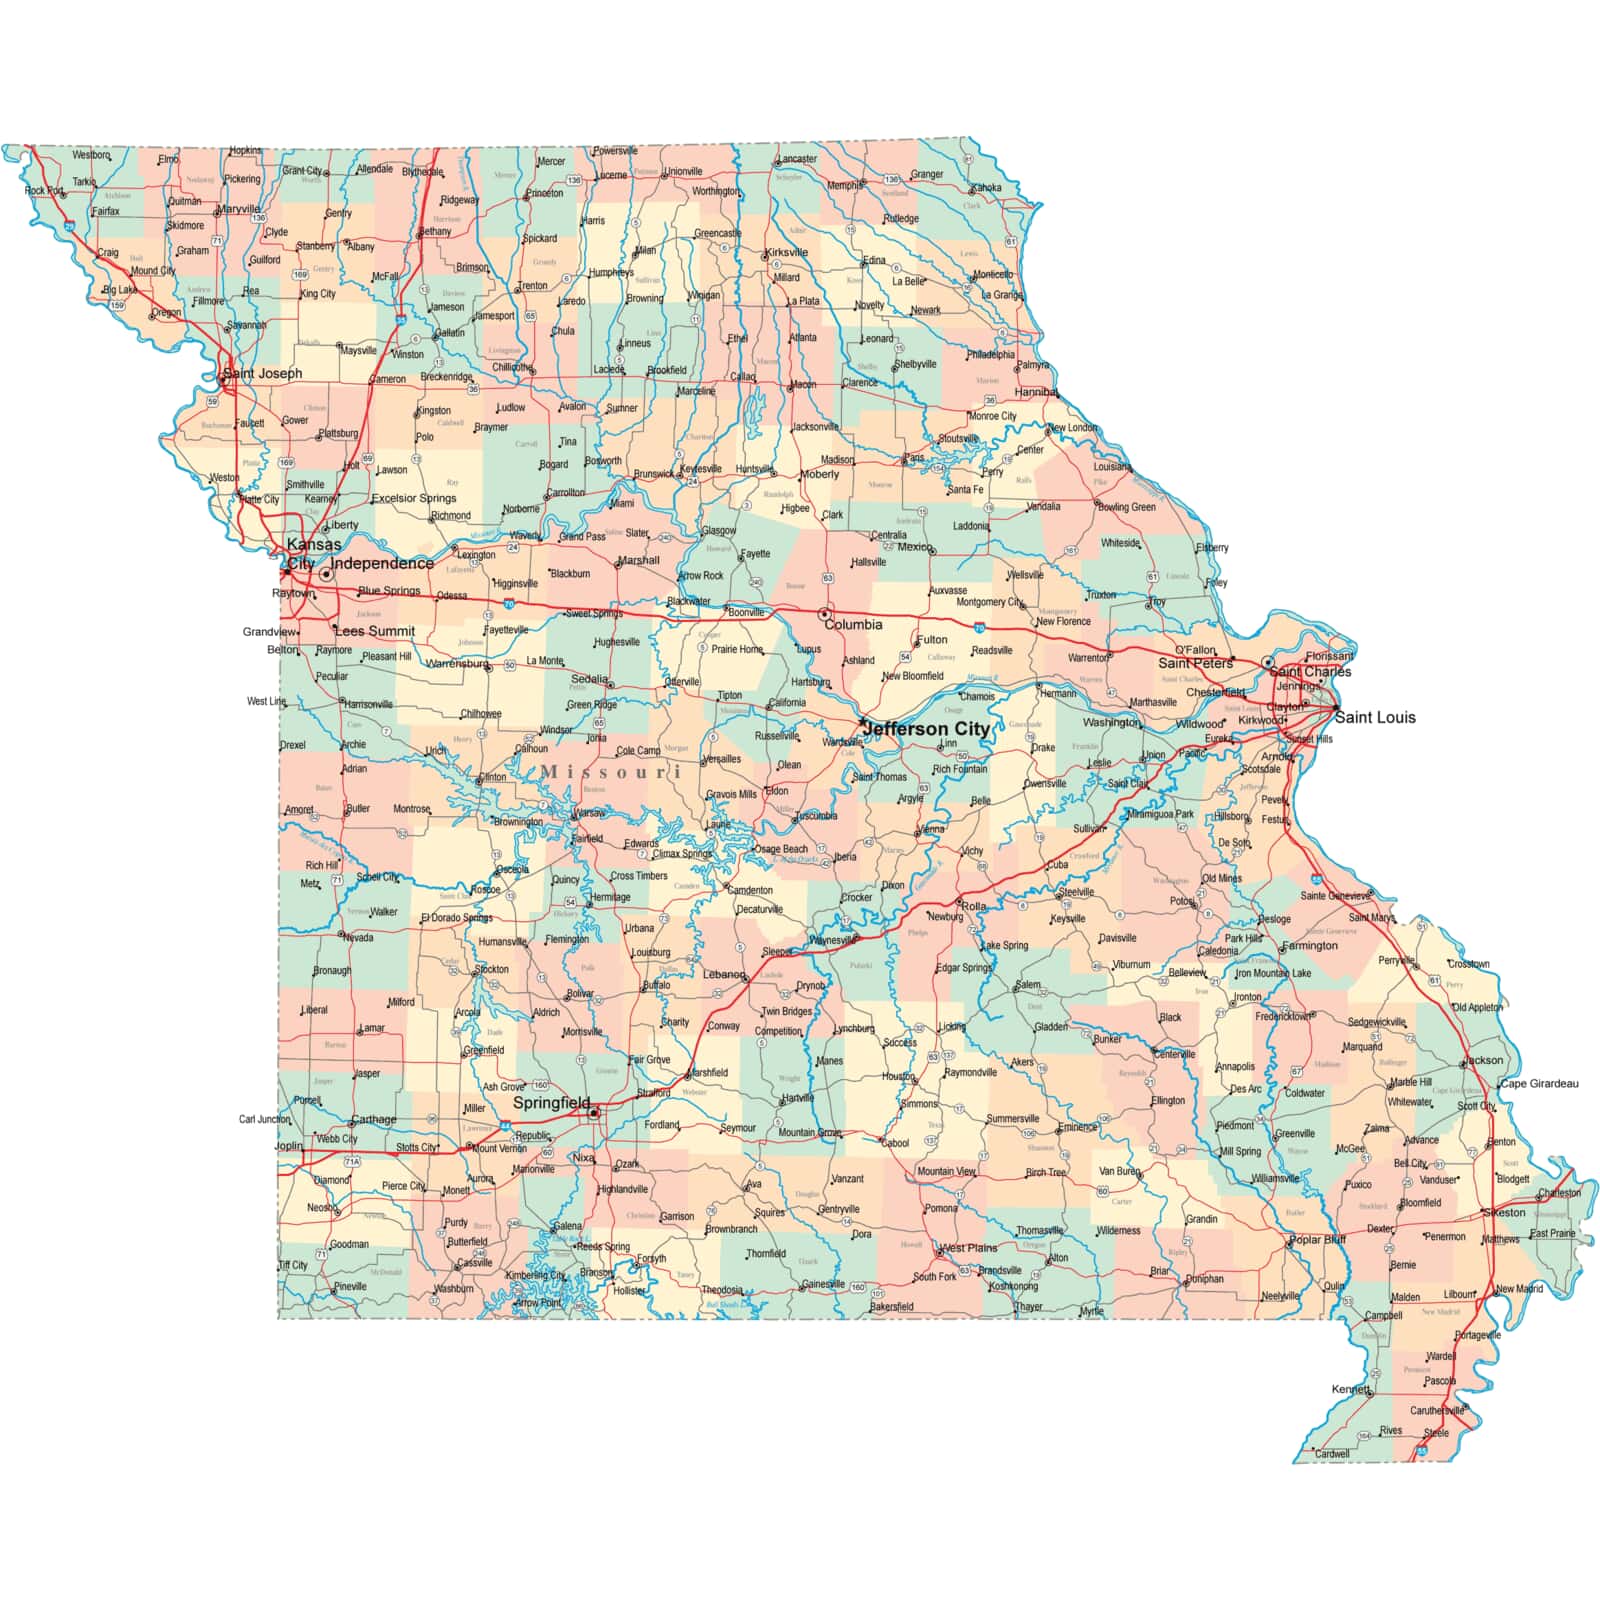 highway map of missouri state Missouri Road Map Mo Road Map Missouri Highway Map highway map of missouri state